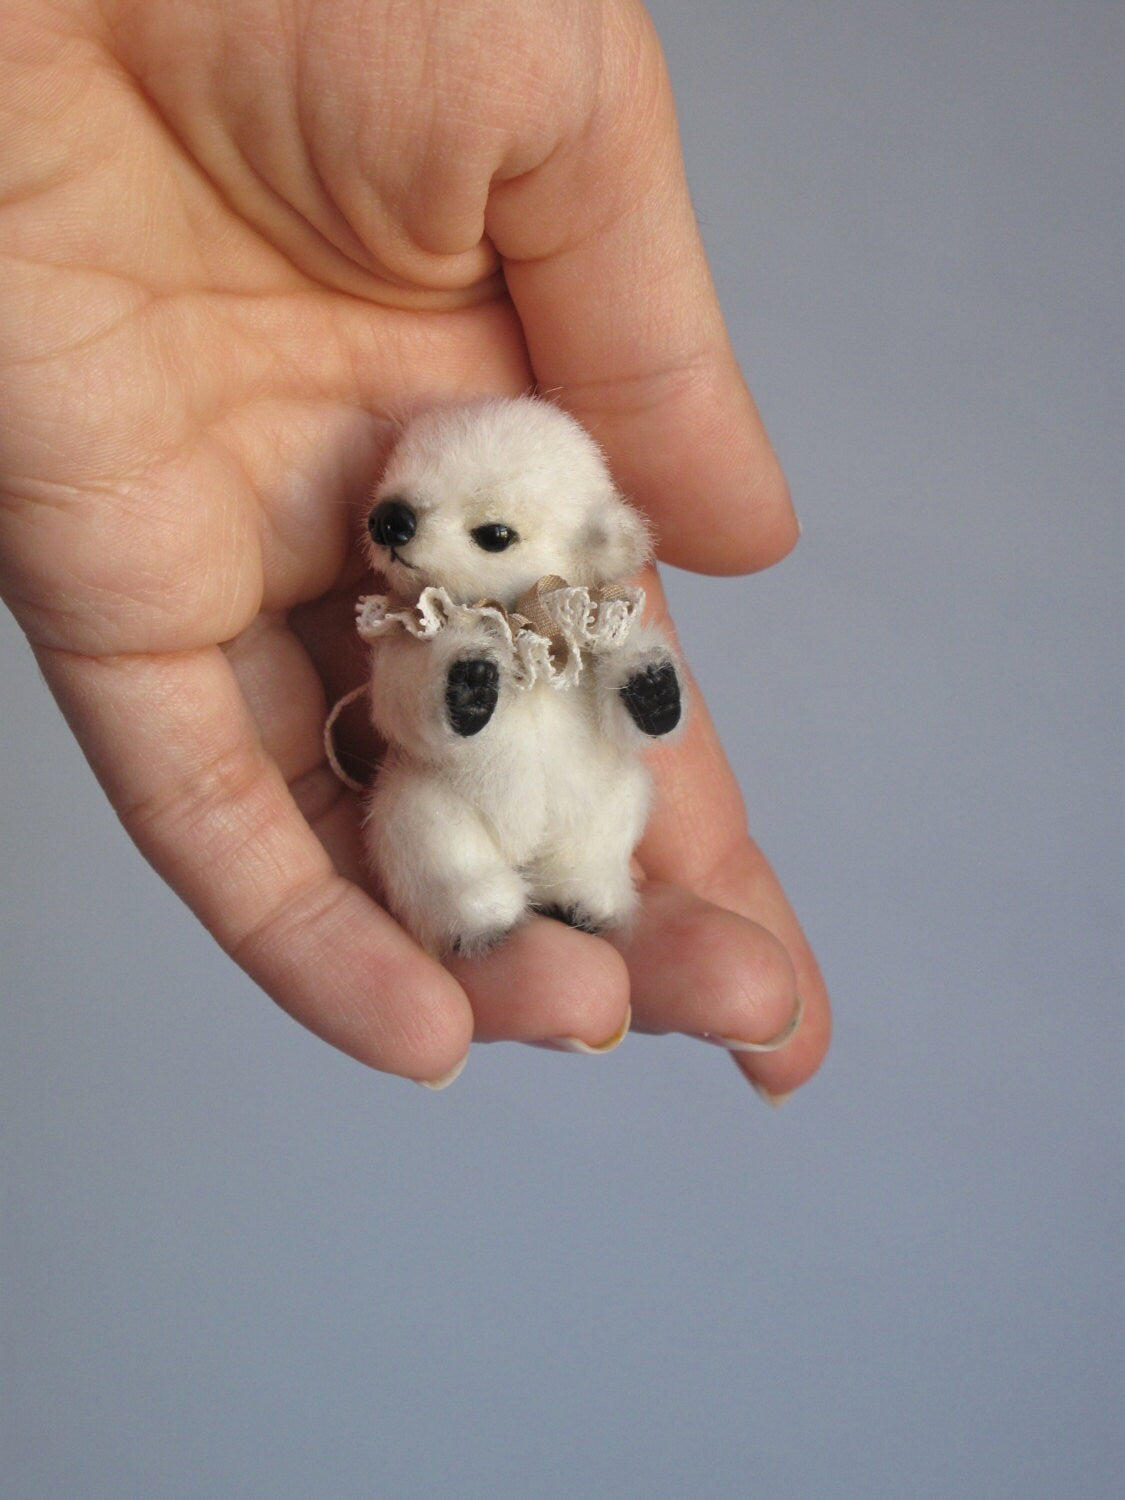 Miniature polar bear PATTERN, how to sew a teddy bear PDF pattern, stuffed toy making, easy stuffed animals to sew, white bear pdf pattern